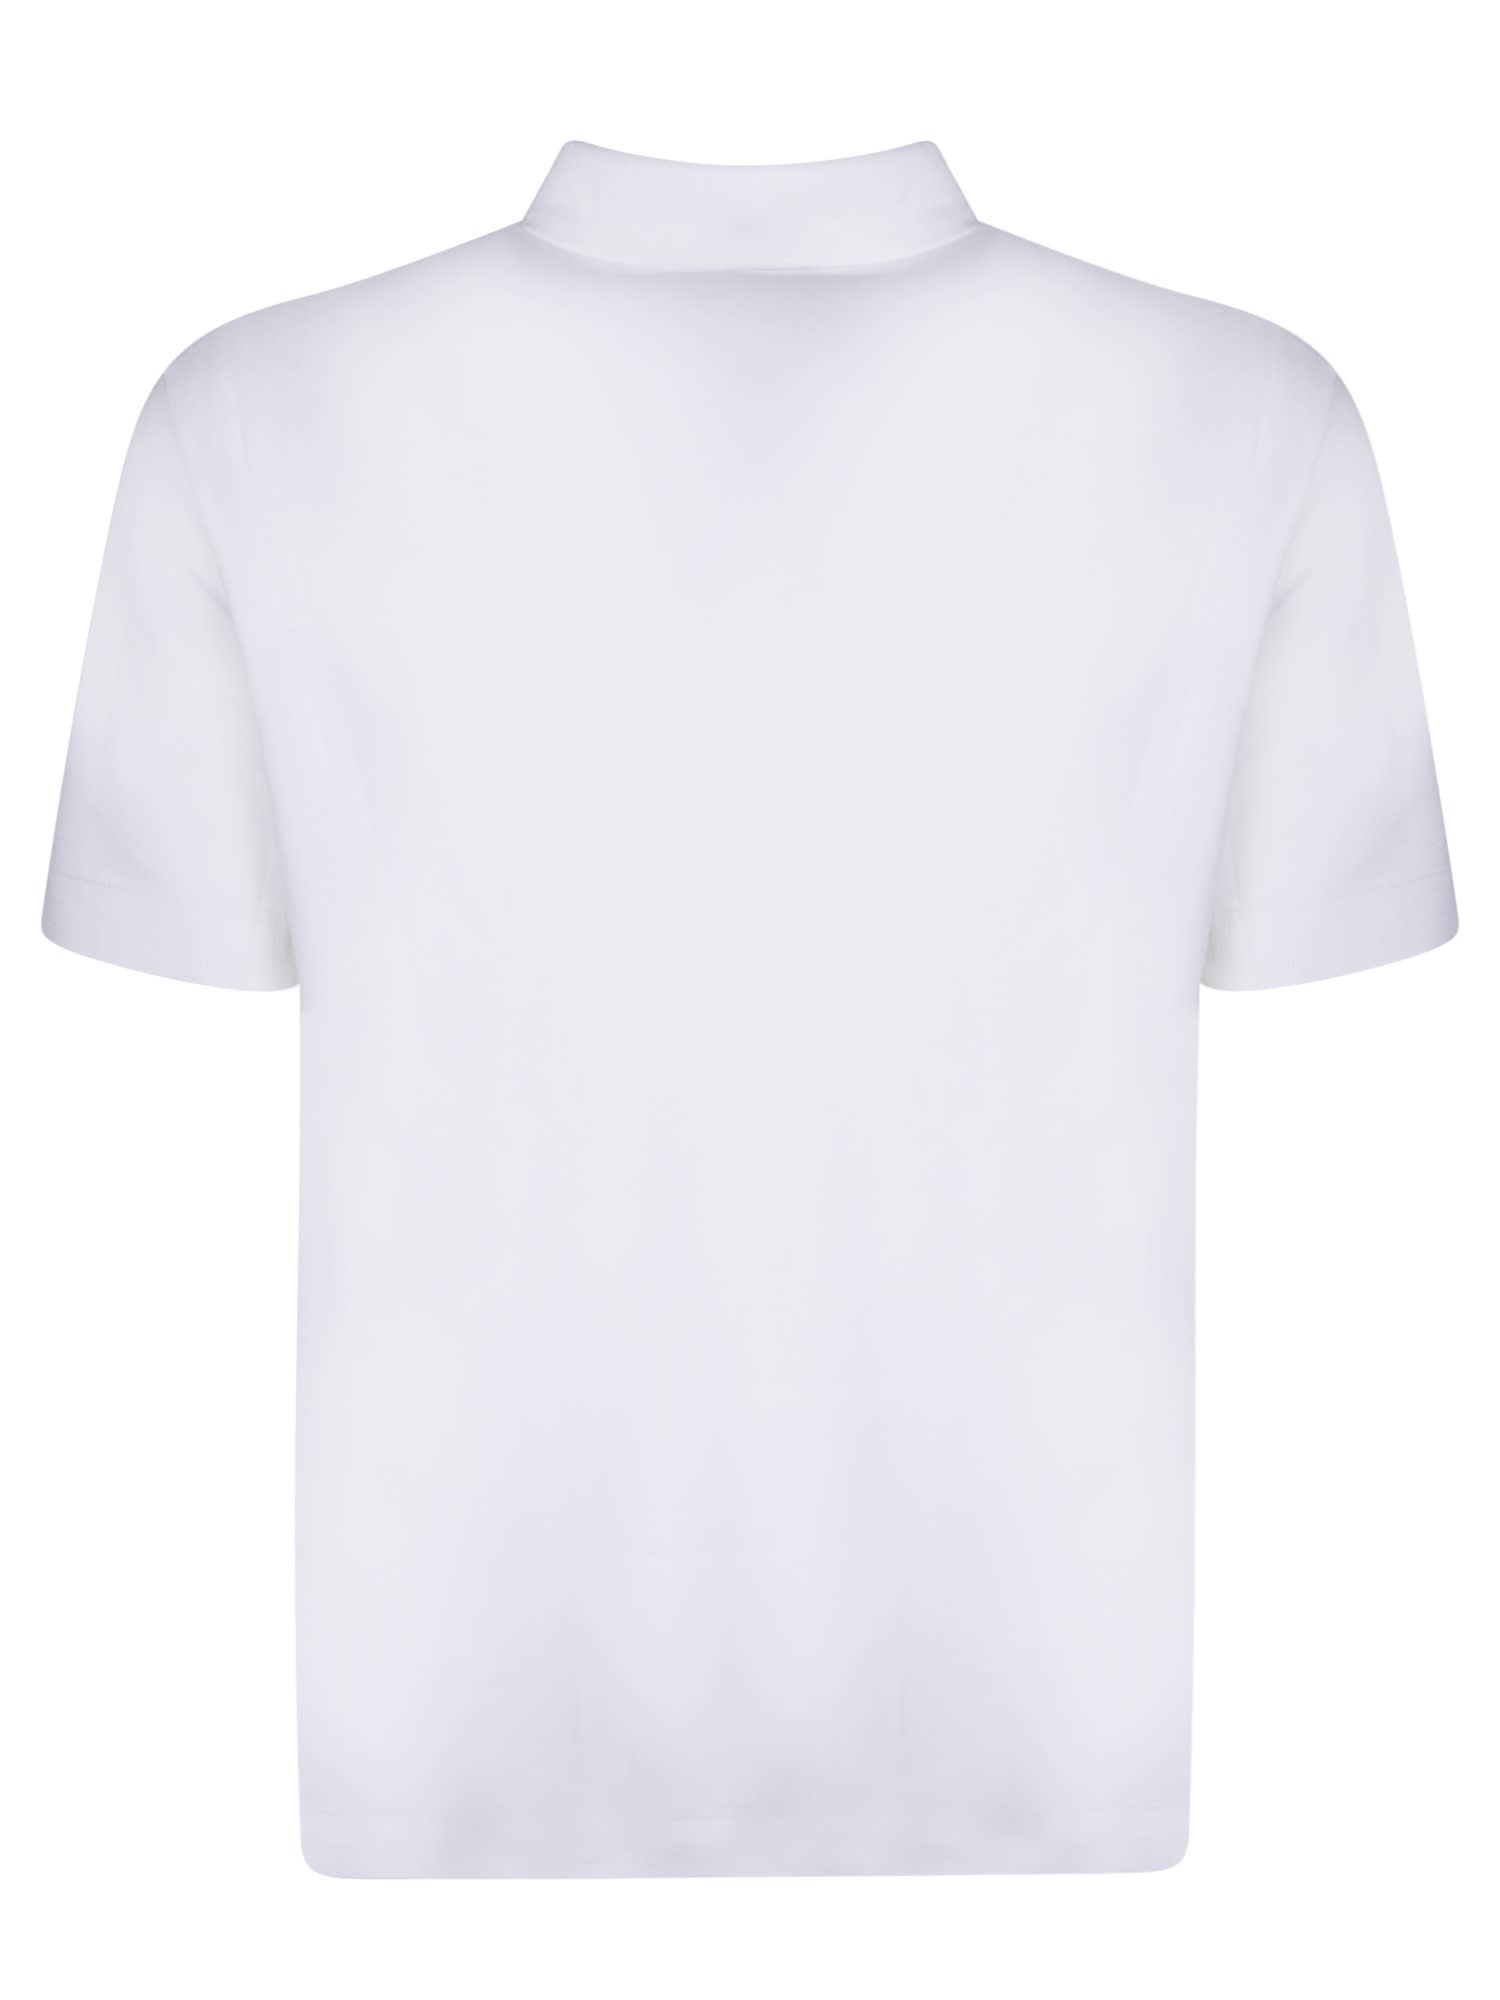 Shop Herno Tricot White Polo Shirt